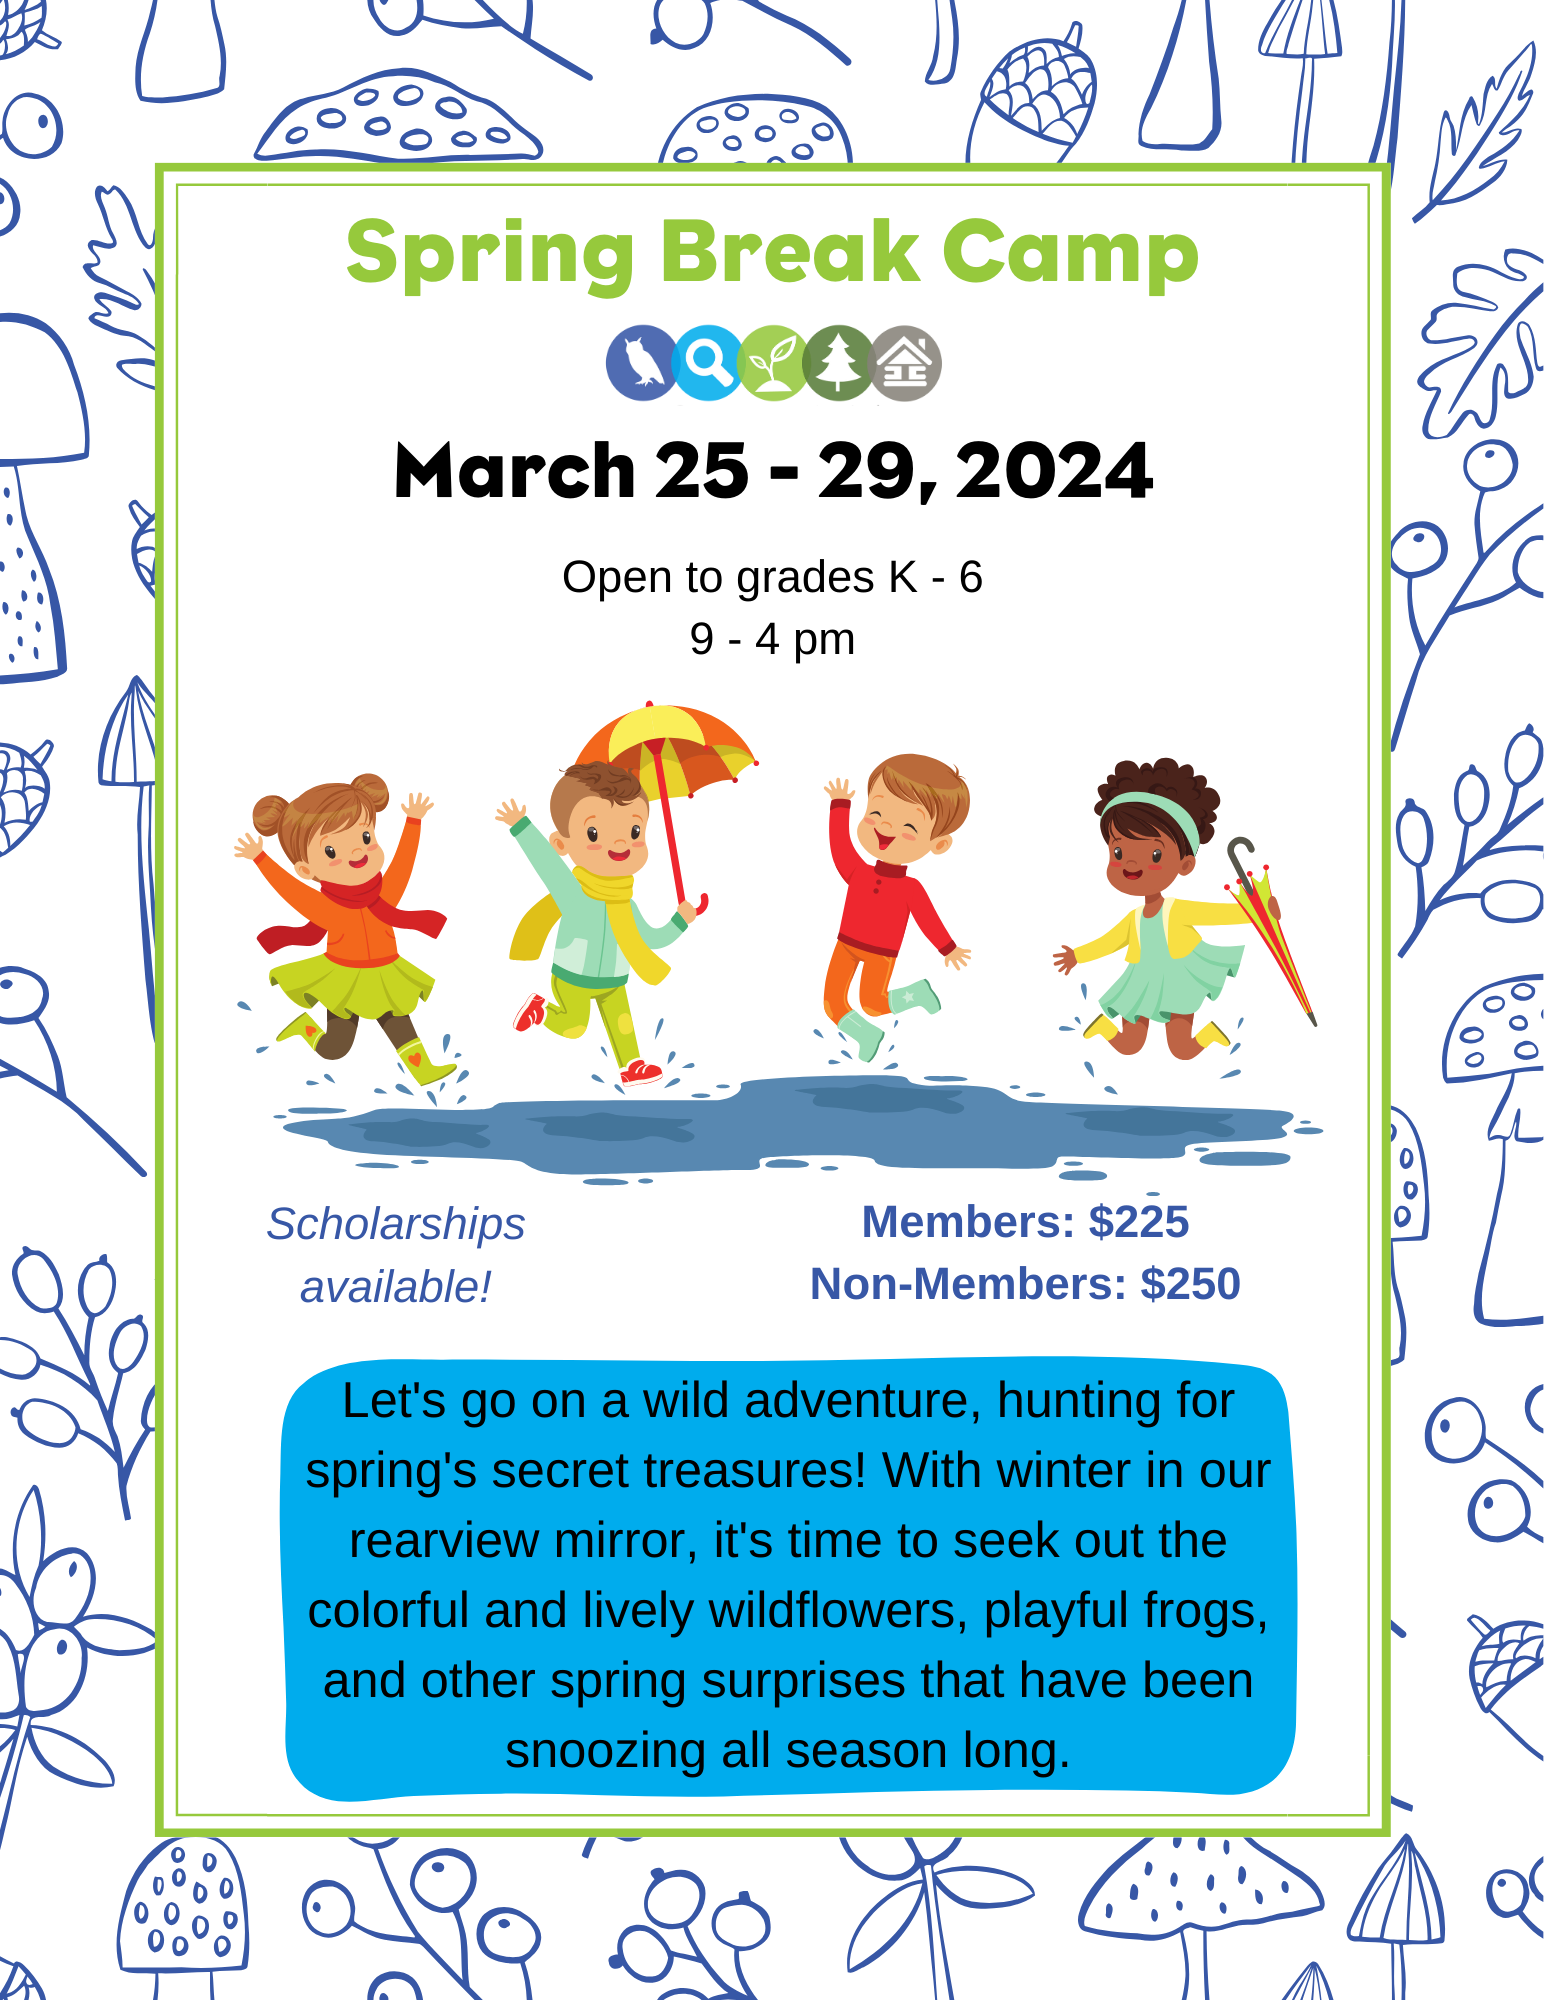 Spring Break Camp | March 25 - 29